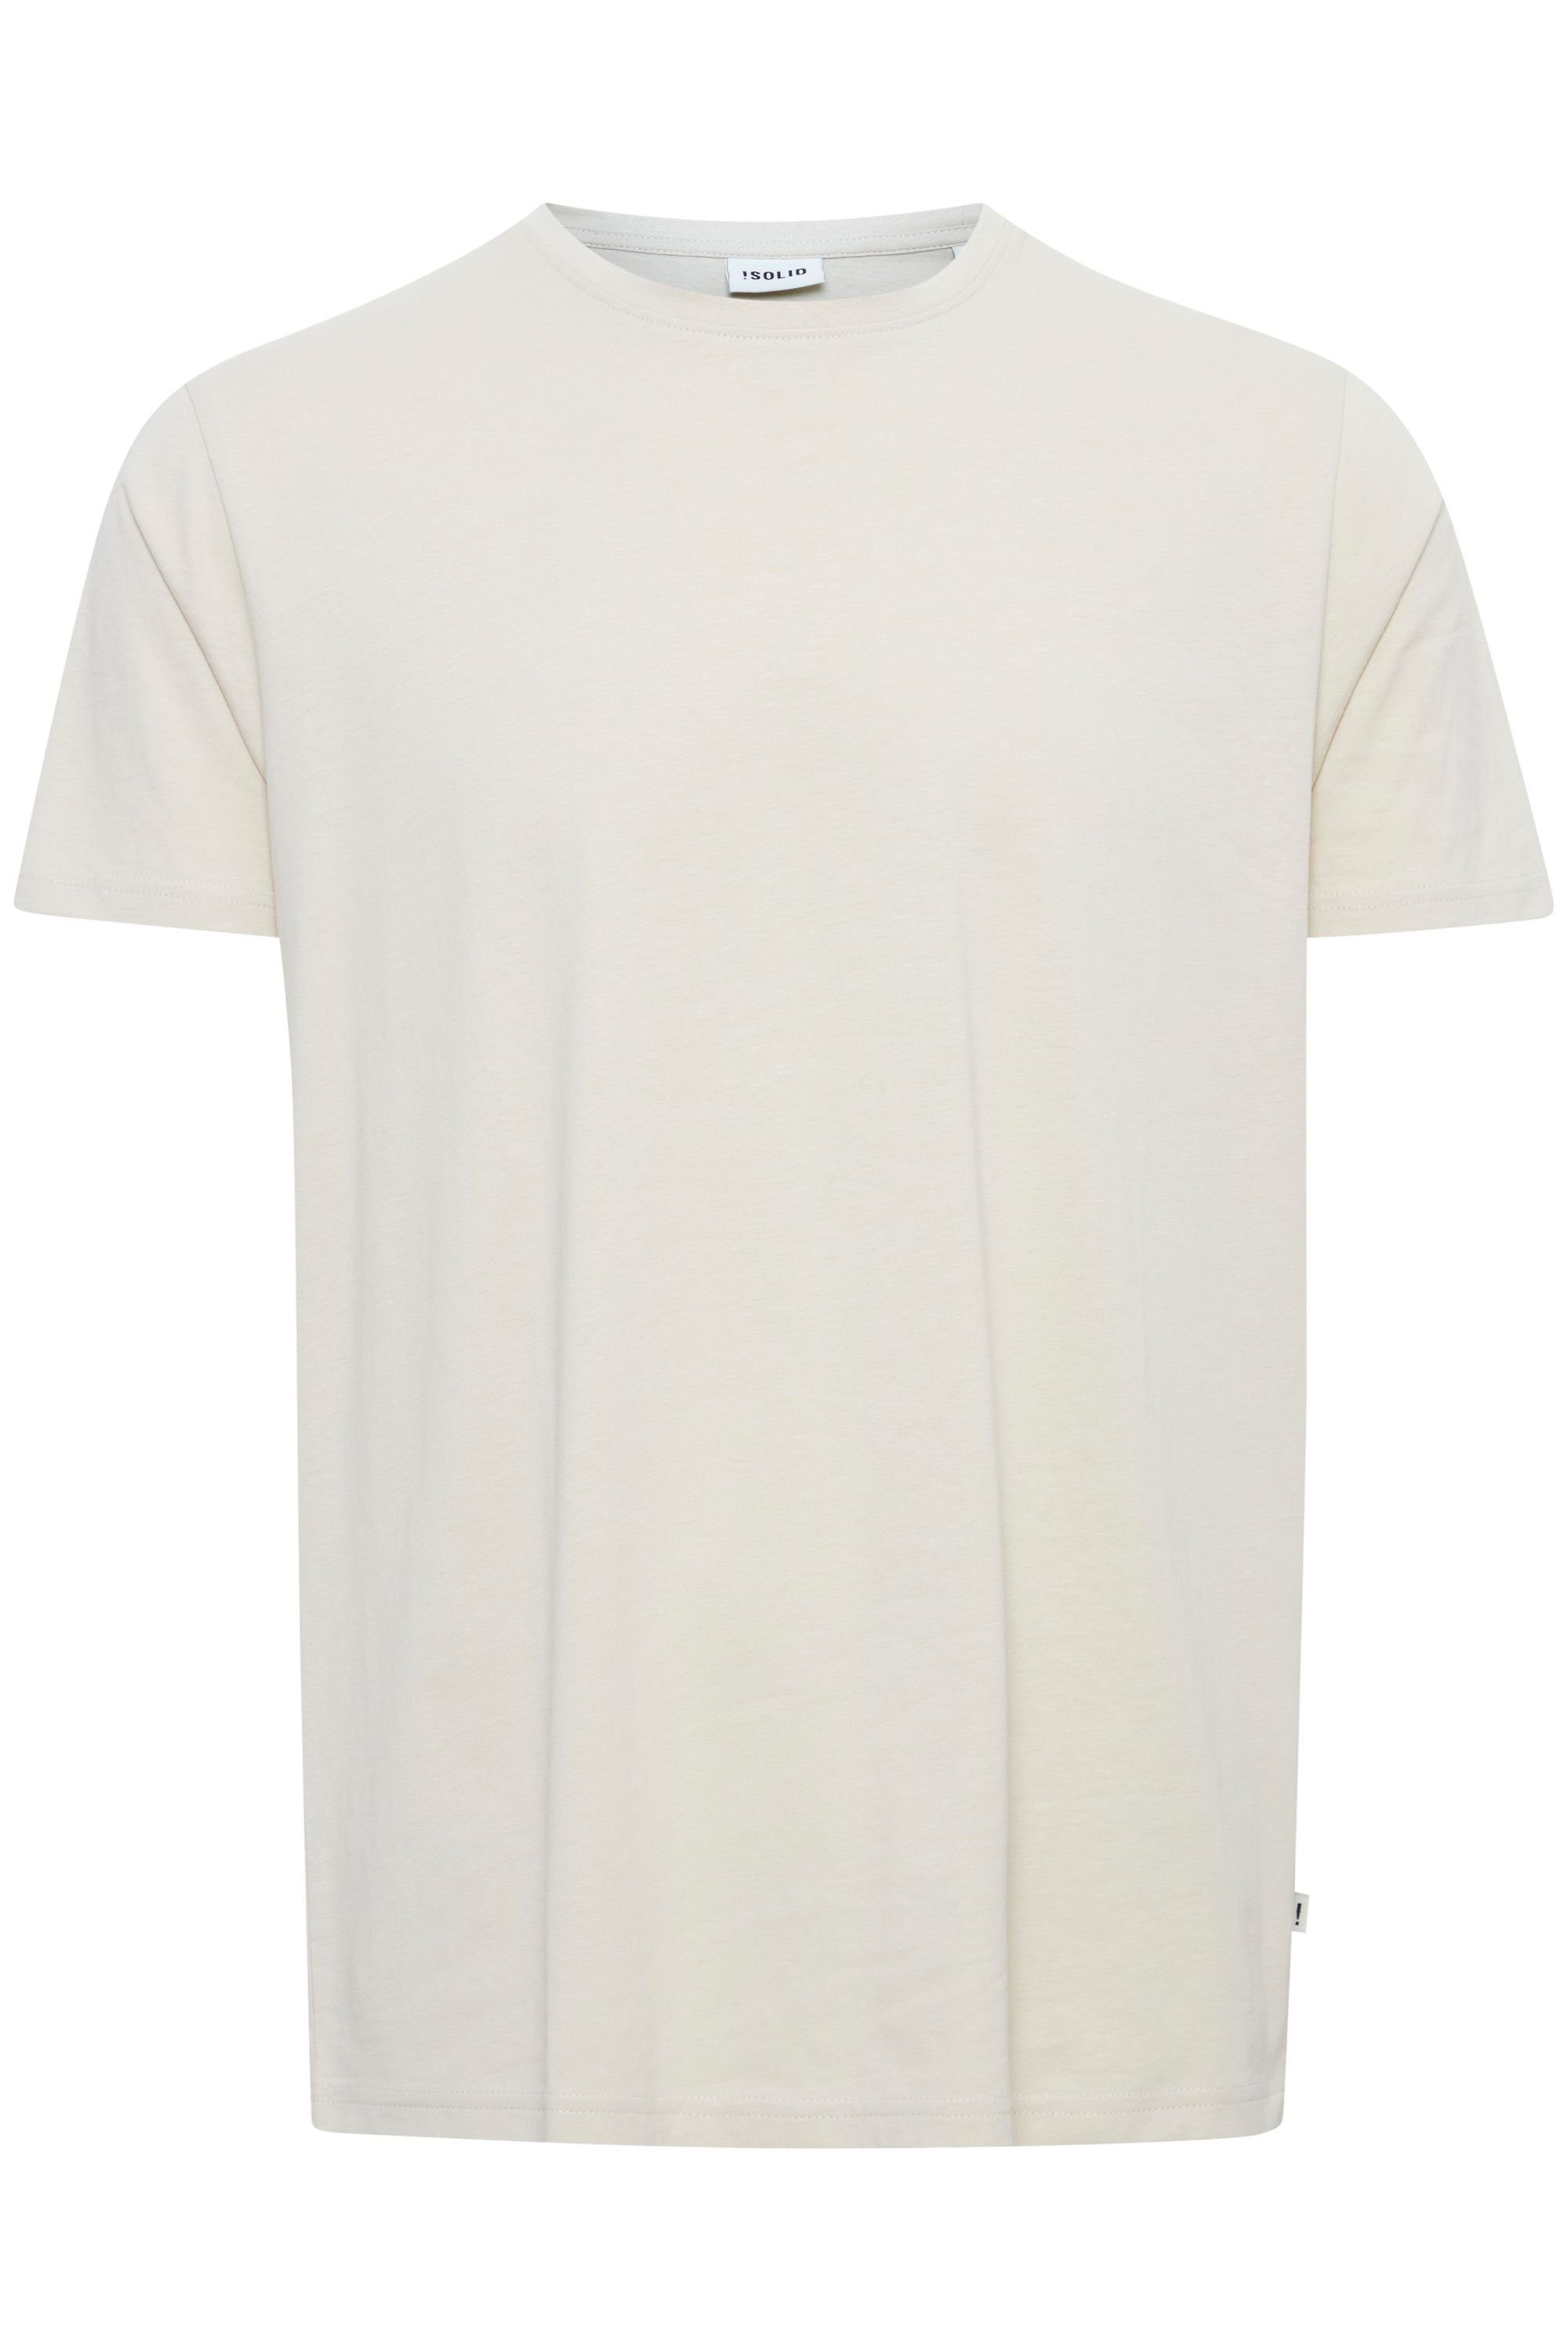 Solid T-Shirt 6194761, Tee - (130401) - SS OATMEAL 21103651 Rock